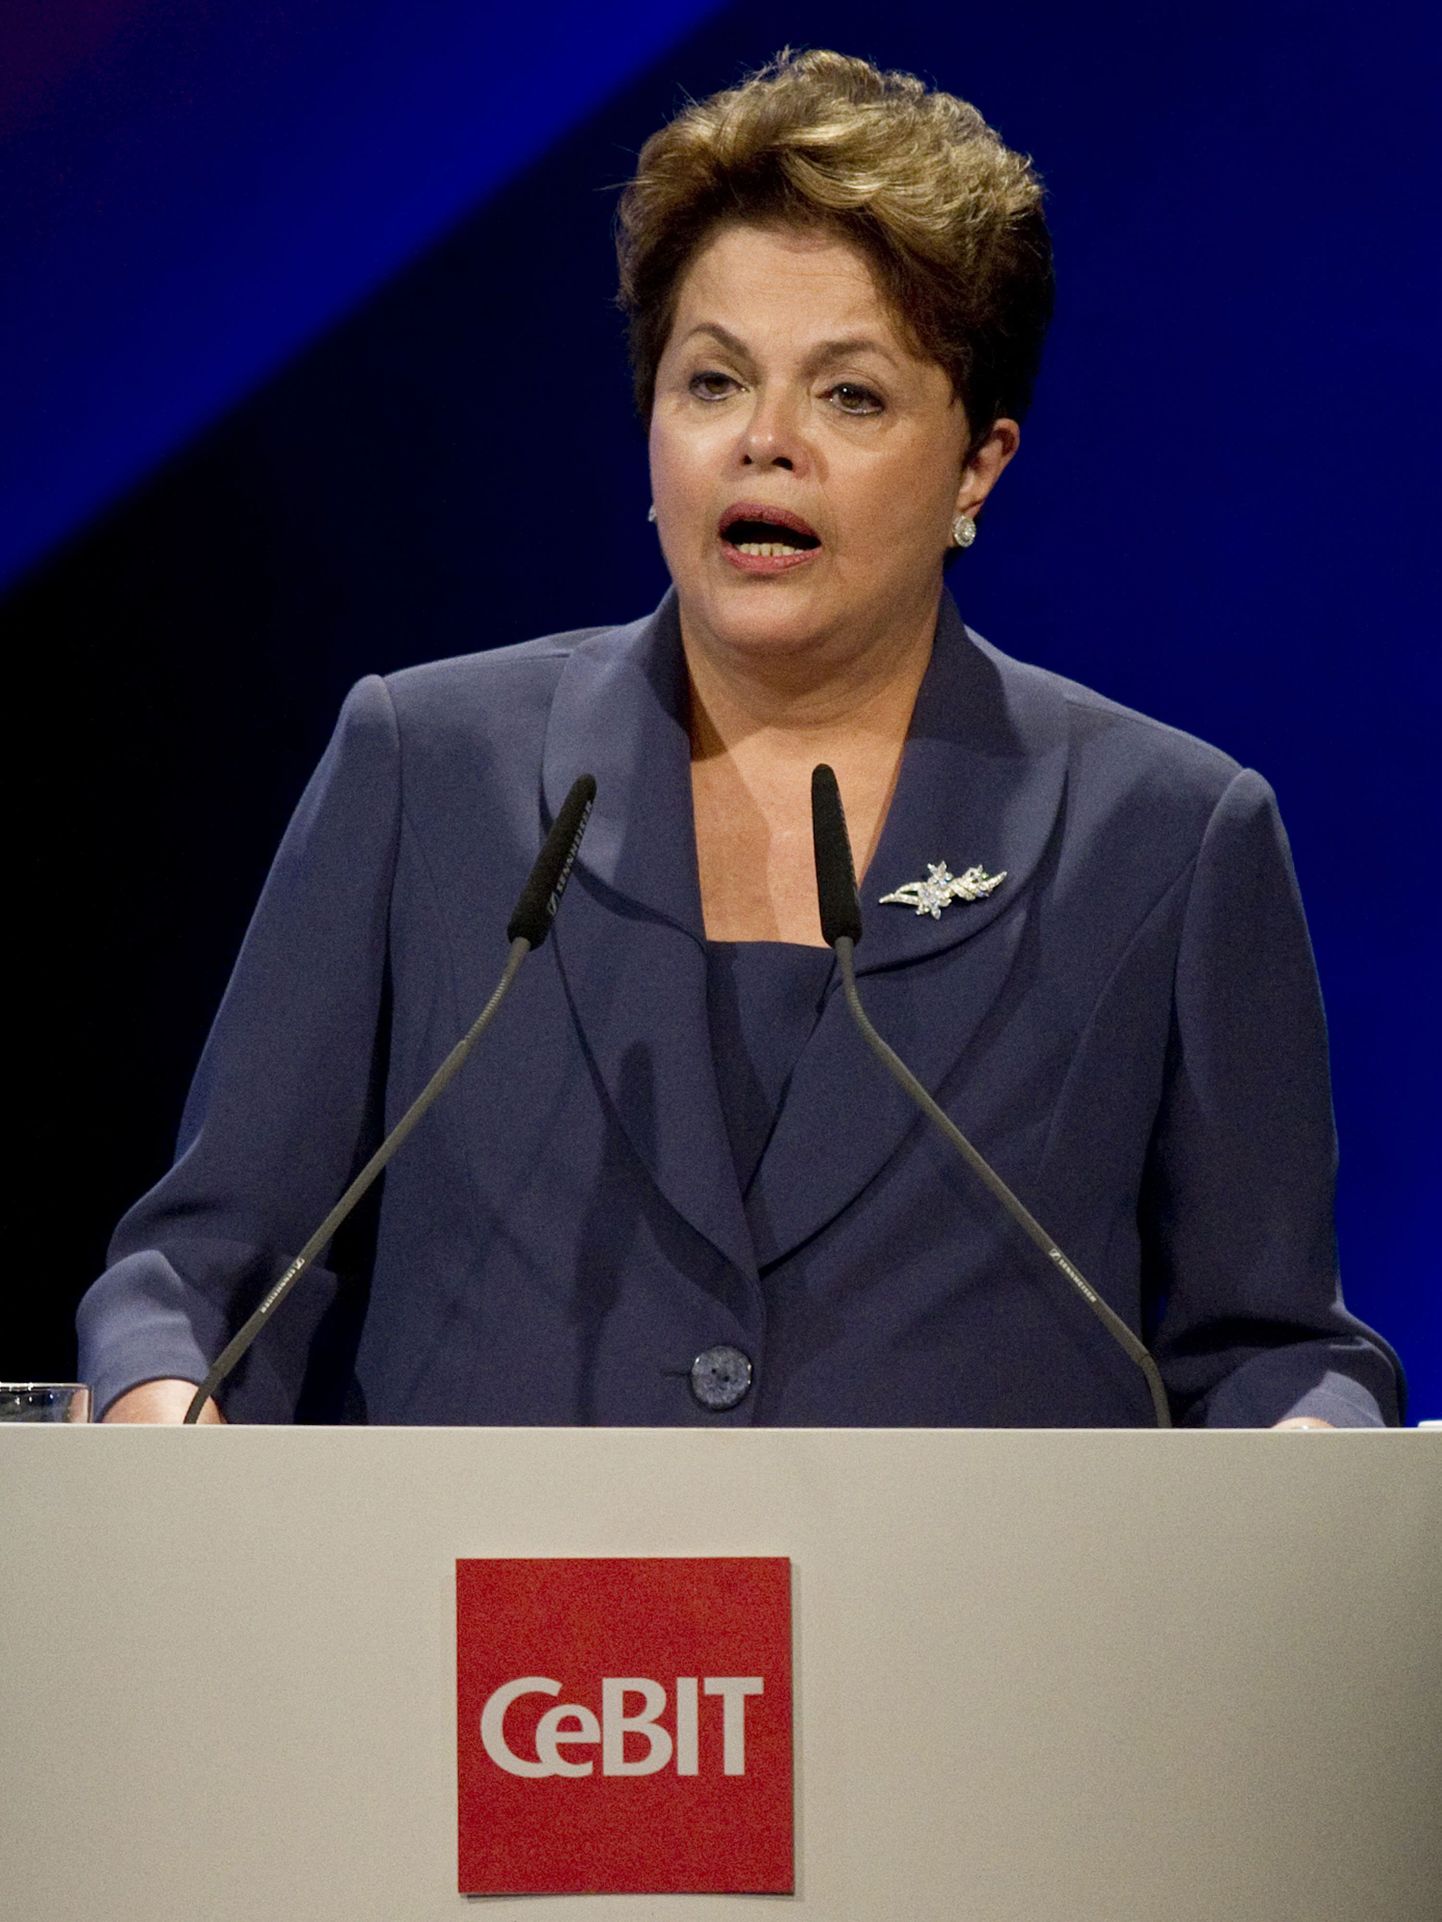 Brasiilia president Dilma Rouseff